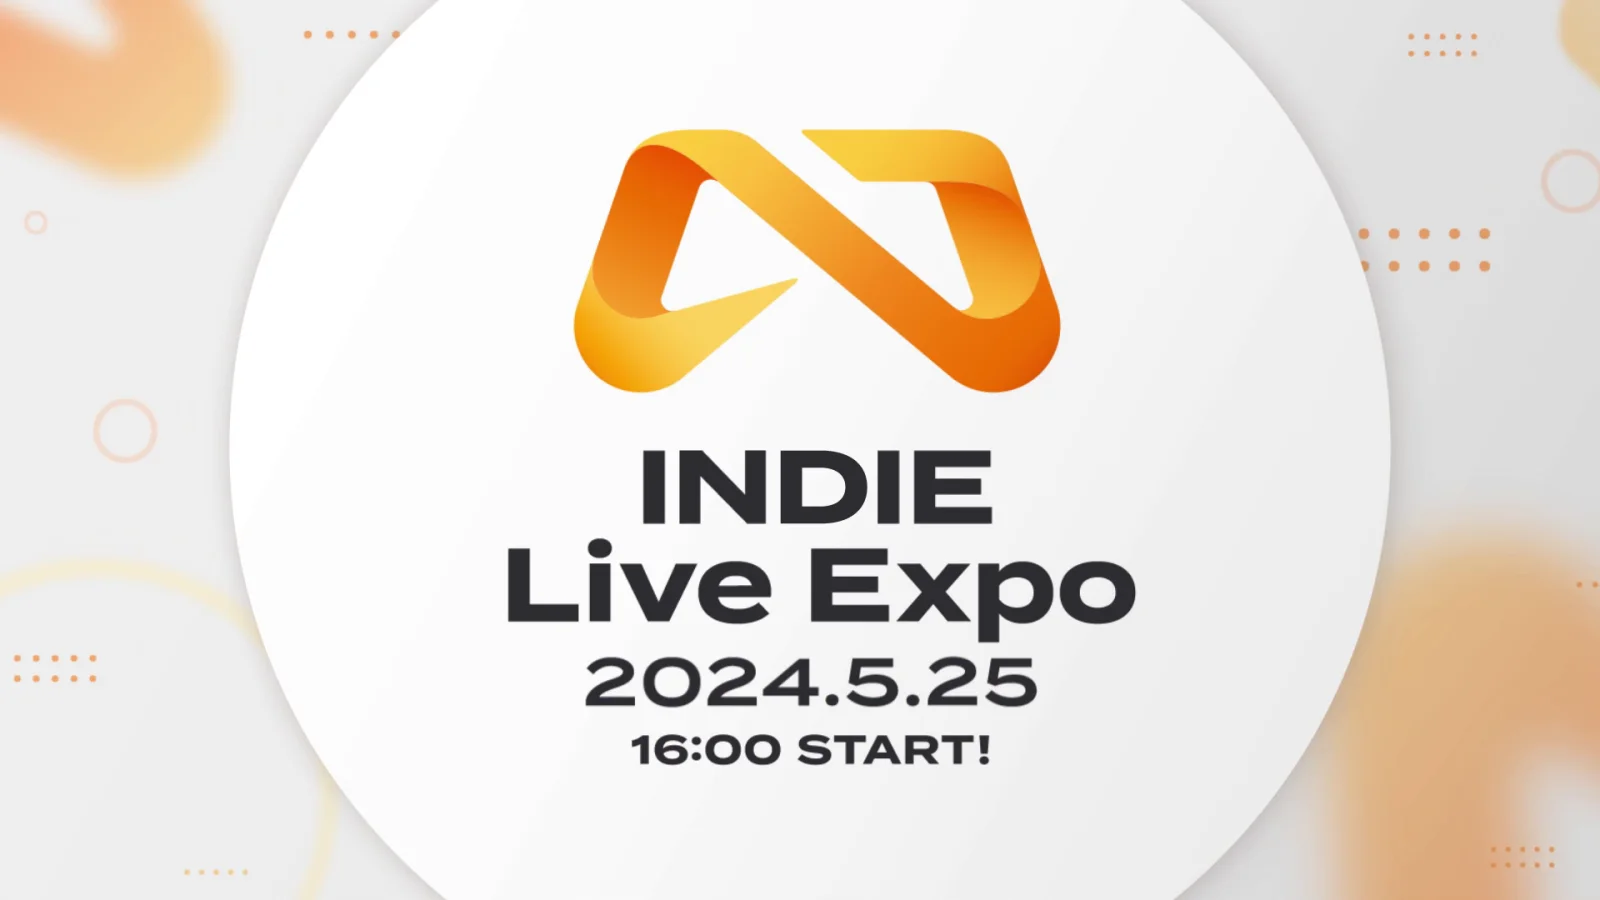 INDIE Live Expo 2024.5.25公布参演嘉宾及部分参展游戏作品